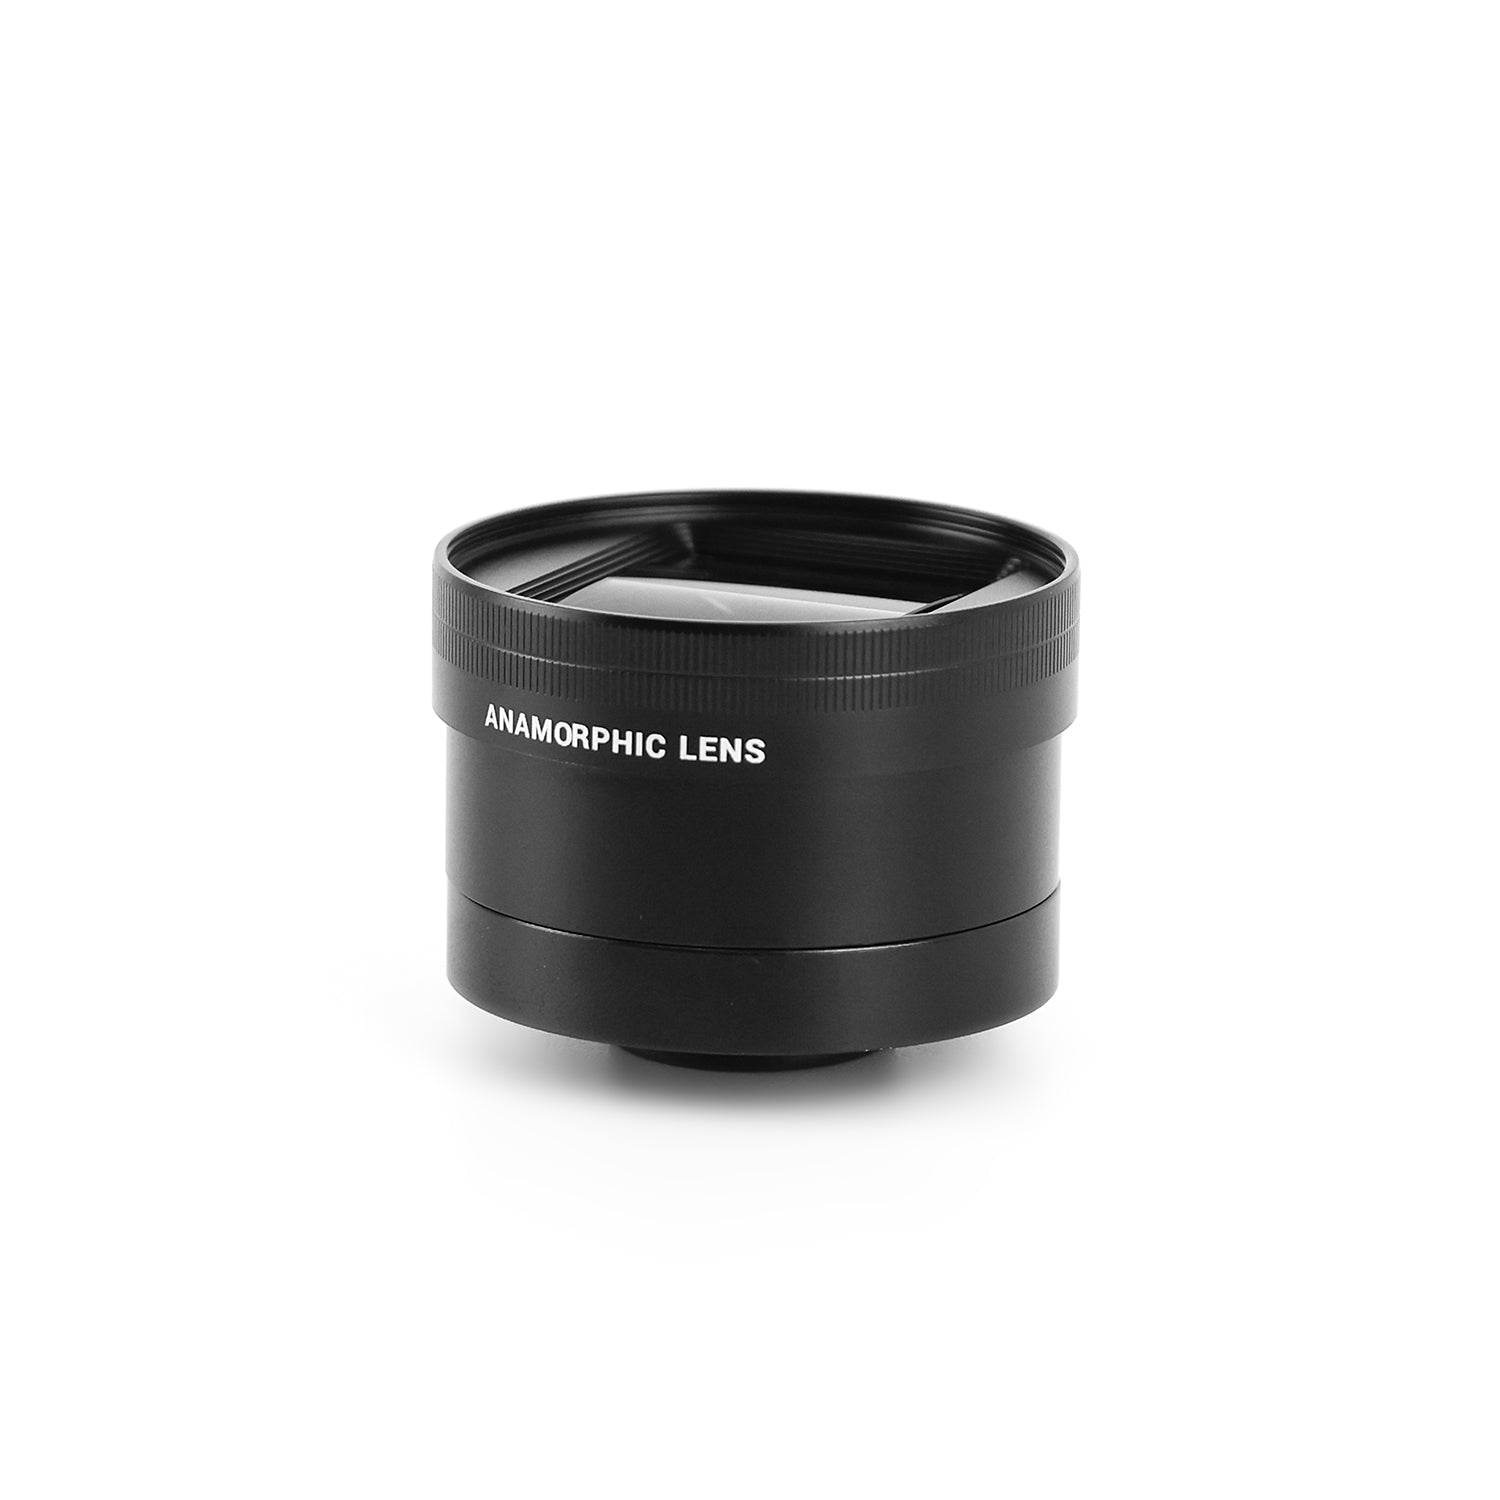 Anamorphic Lens Edition - iPhone XS Max